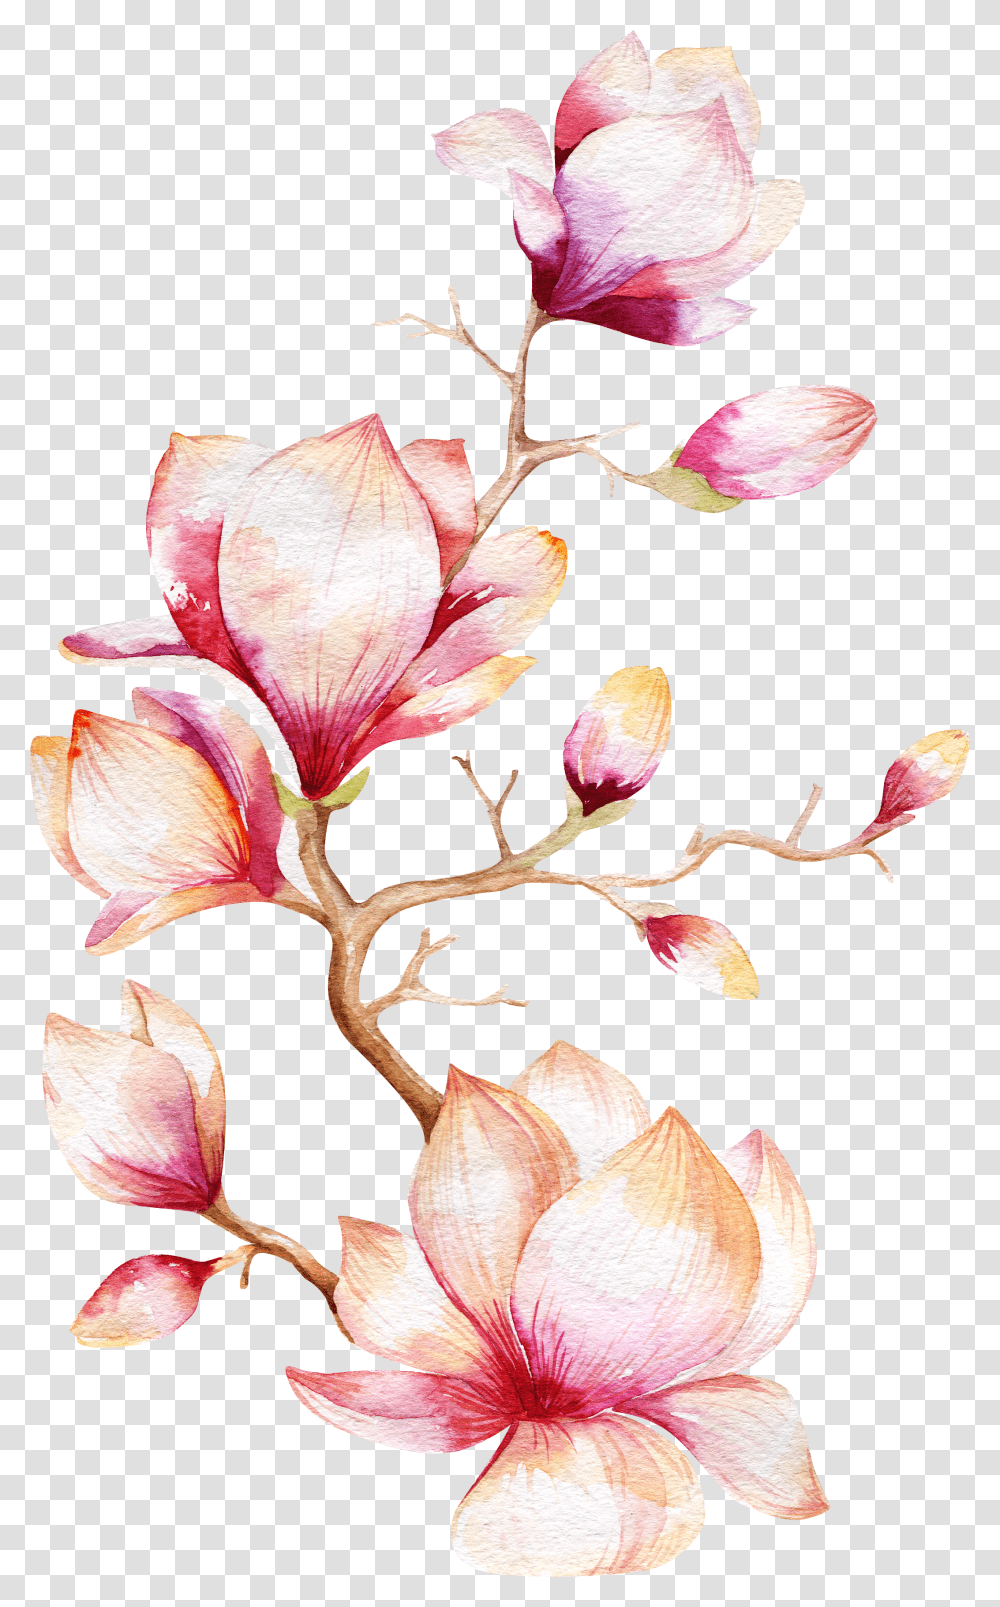 Flower Magnolia Tree Watercolor Painting Orchid Clipart Magnolia Flower Watercolor Transparent Png